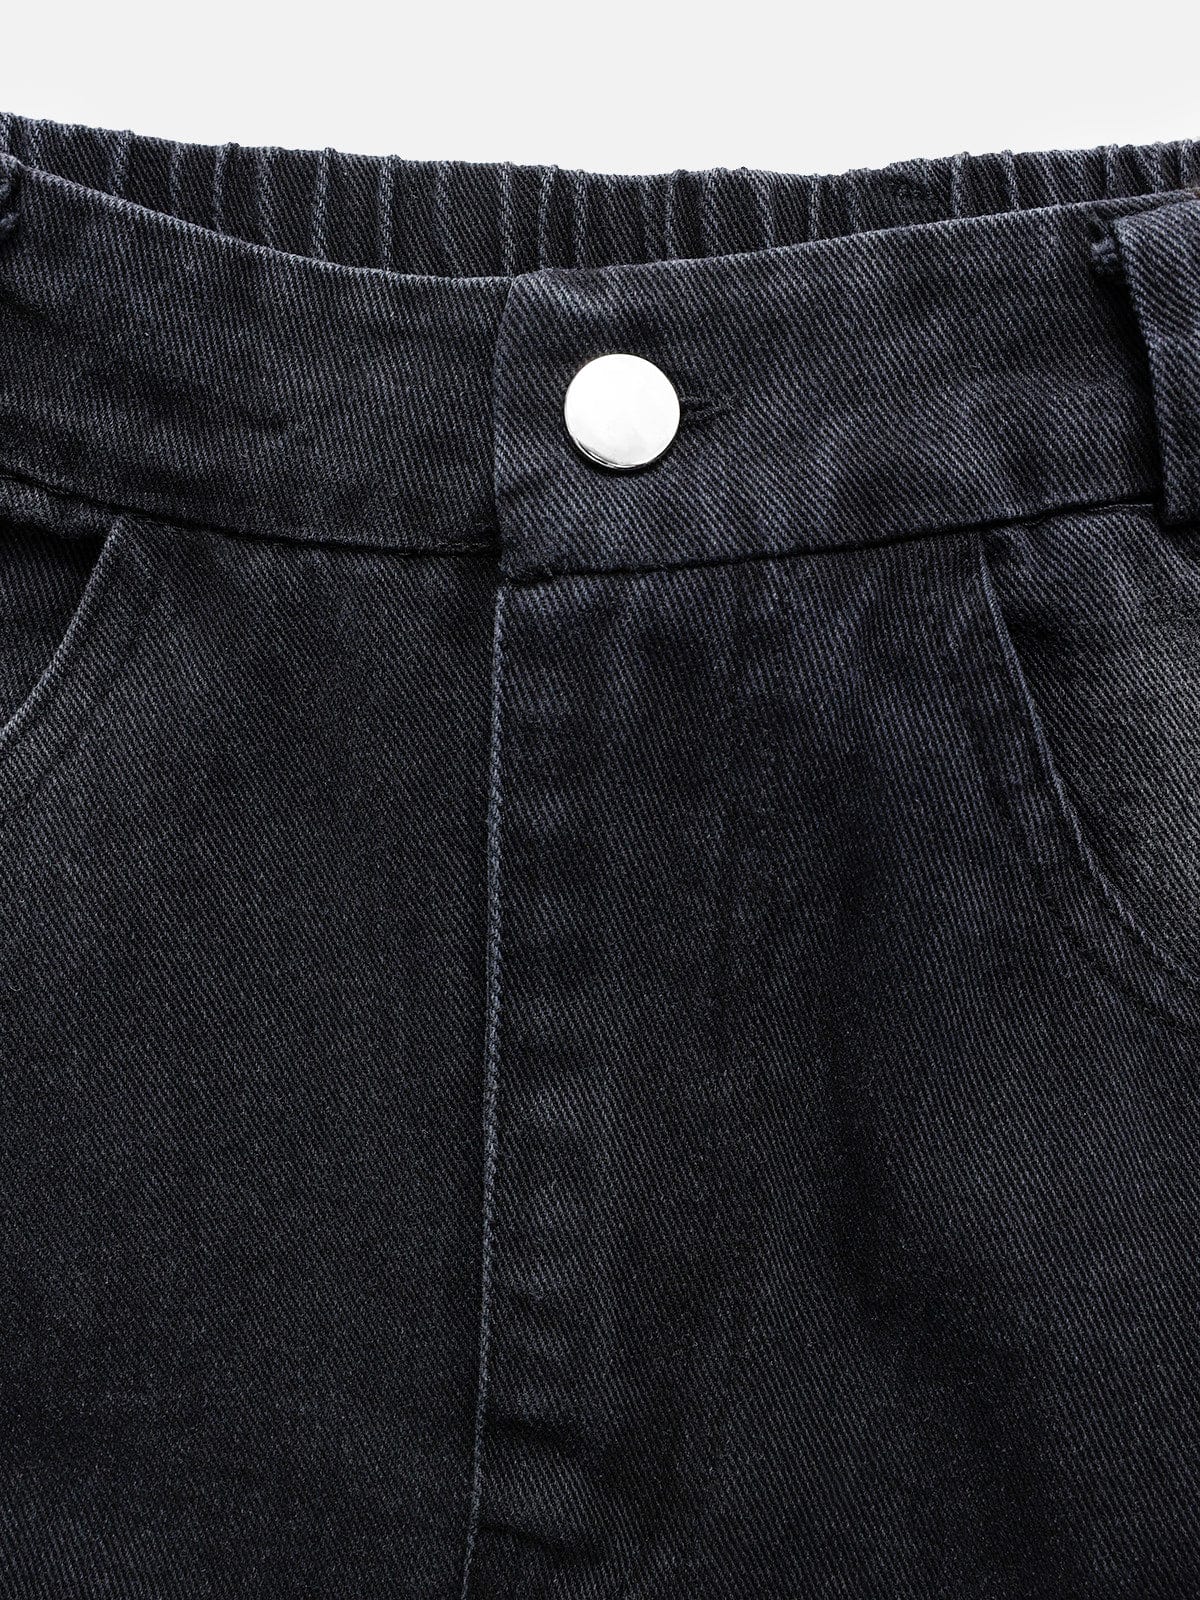 NEV Multi-Pocket Drawstring Jeans